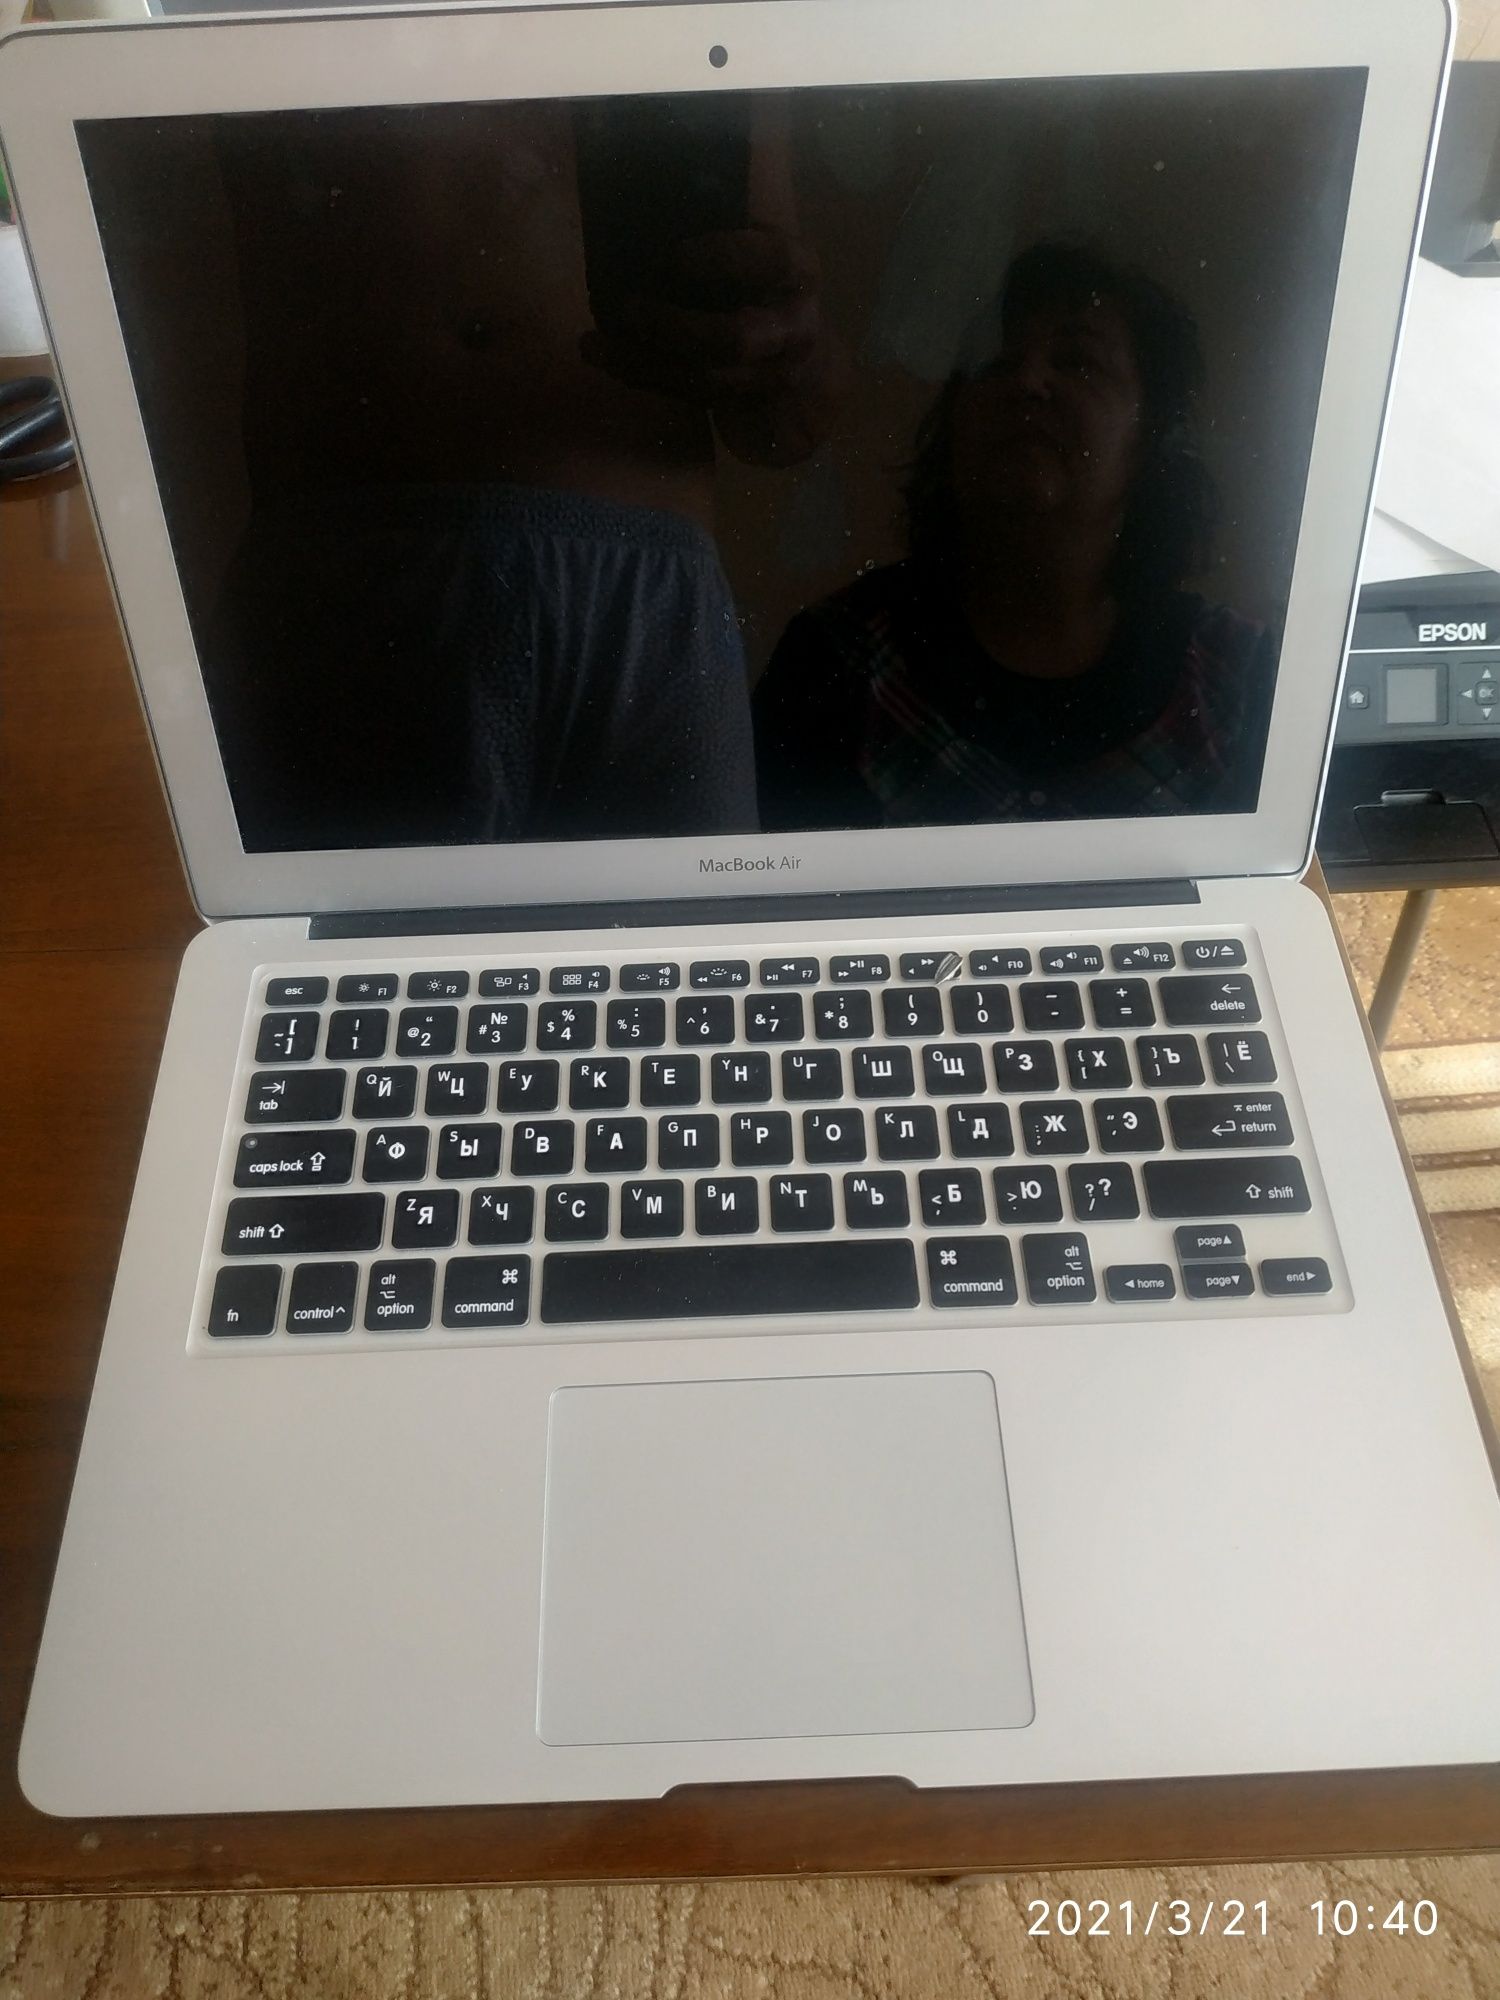 MacBook Air 2018 г. практически новый